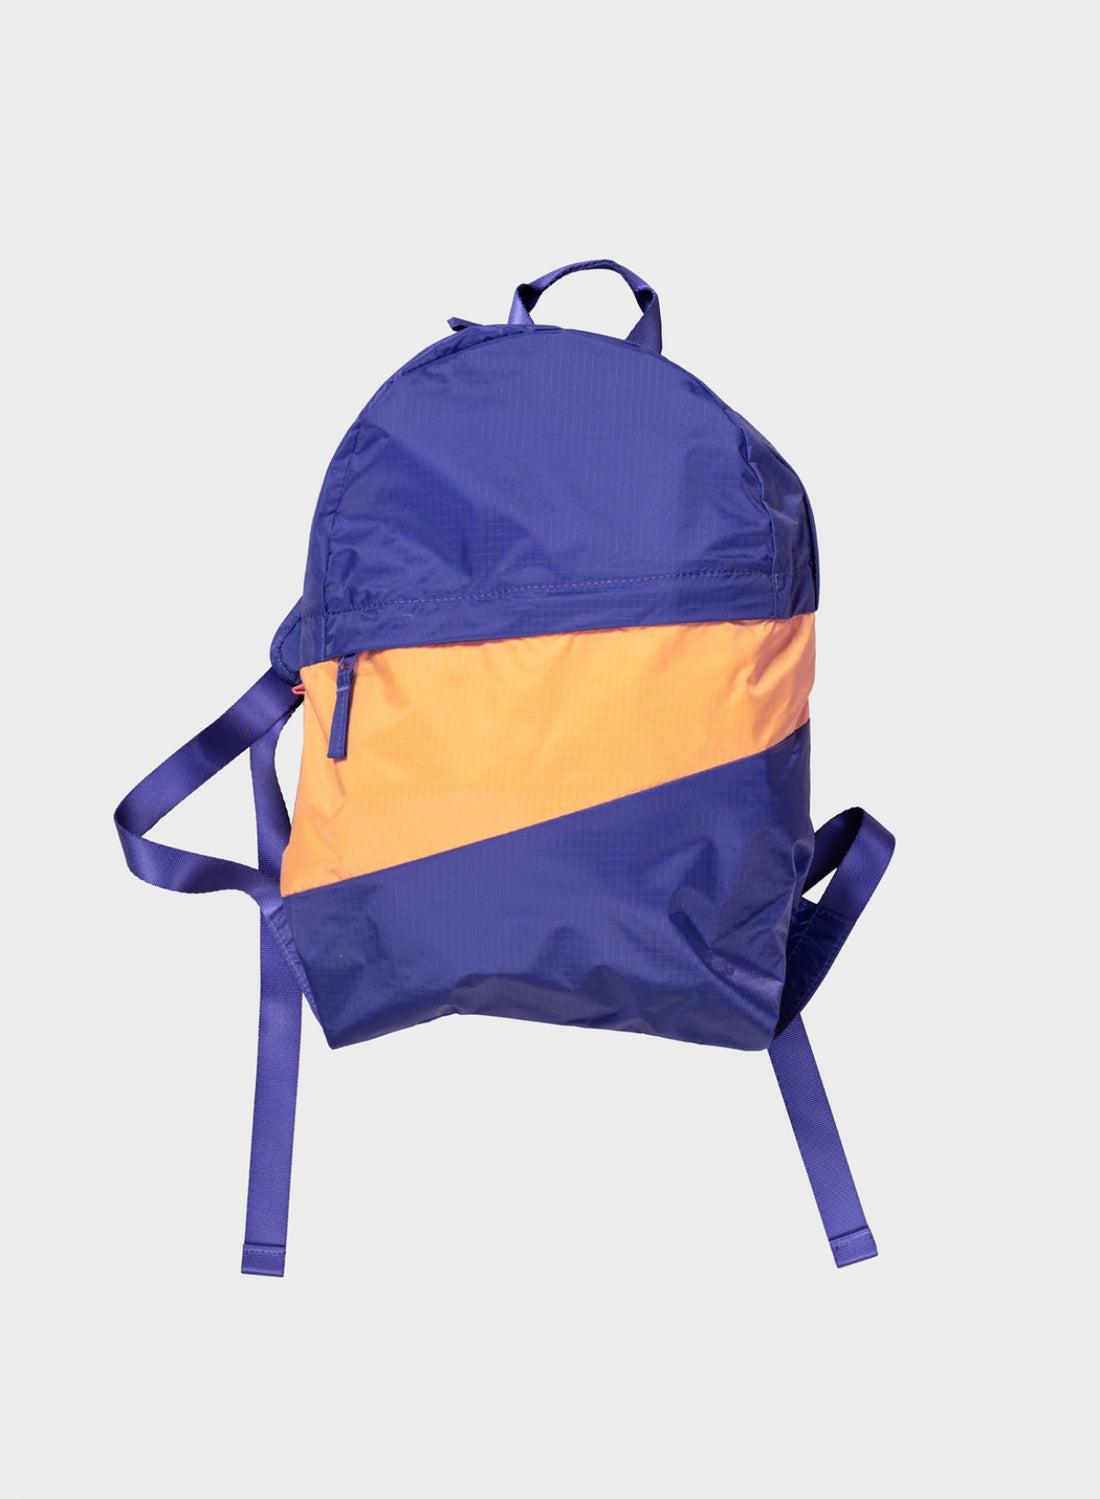 The New Foldable Backpack Medium